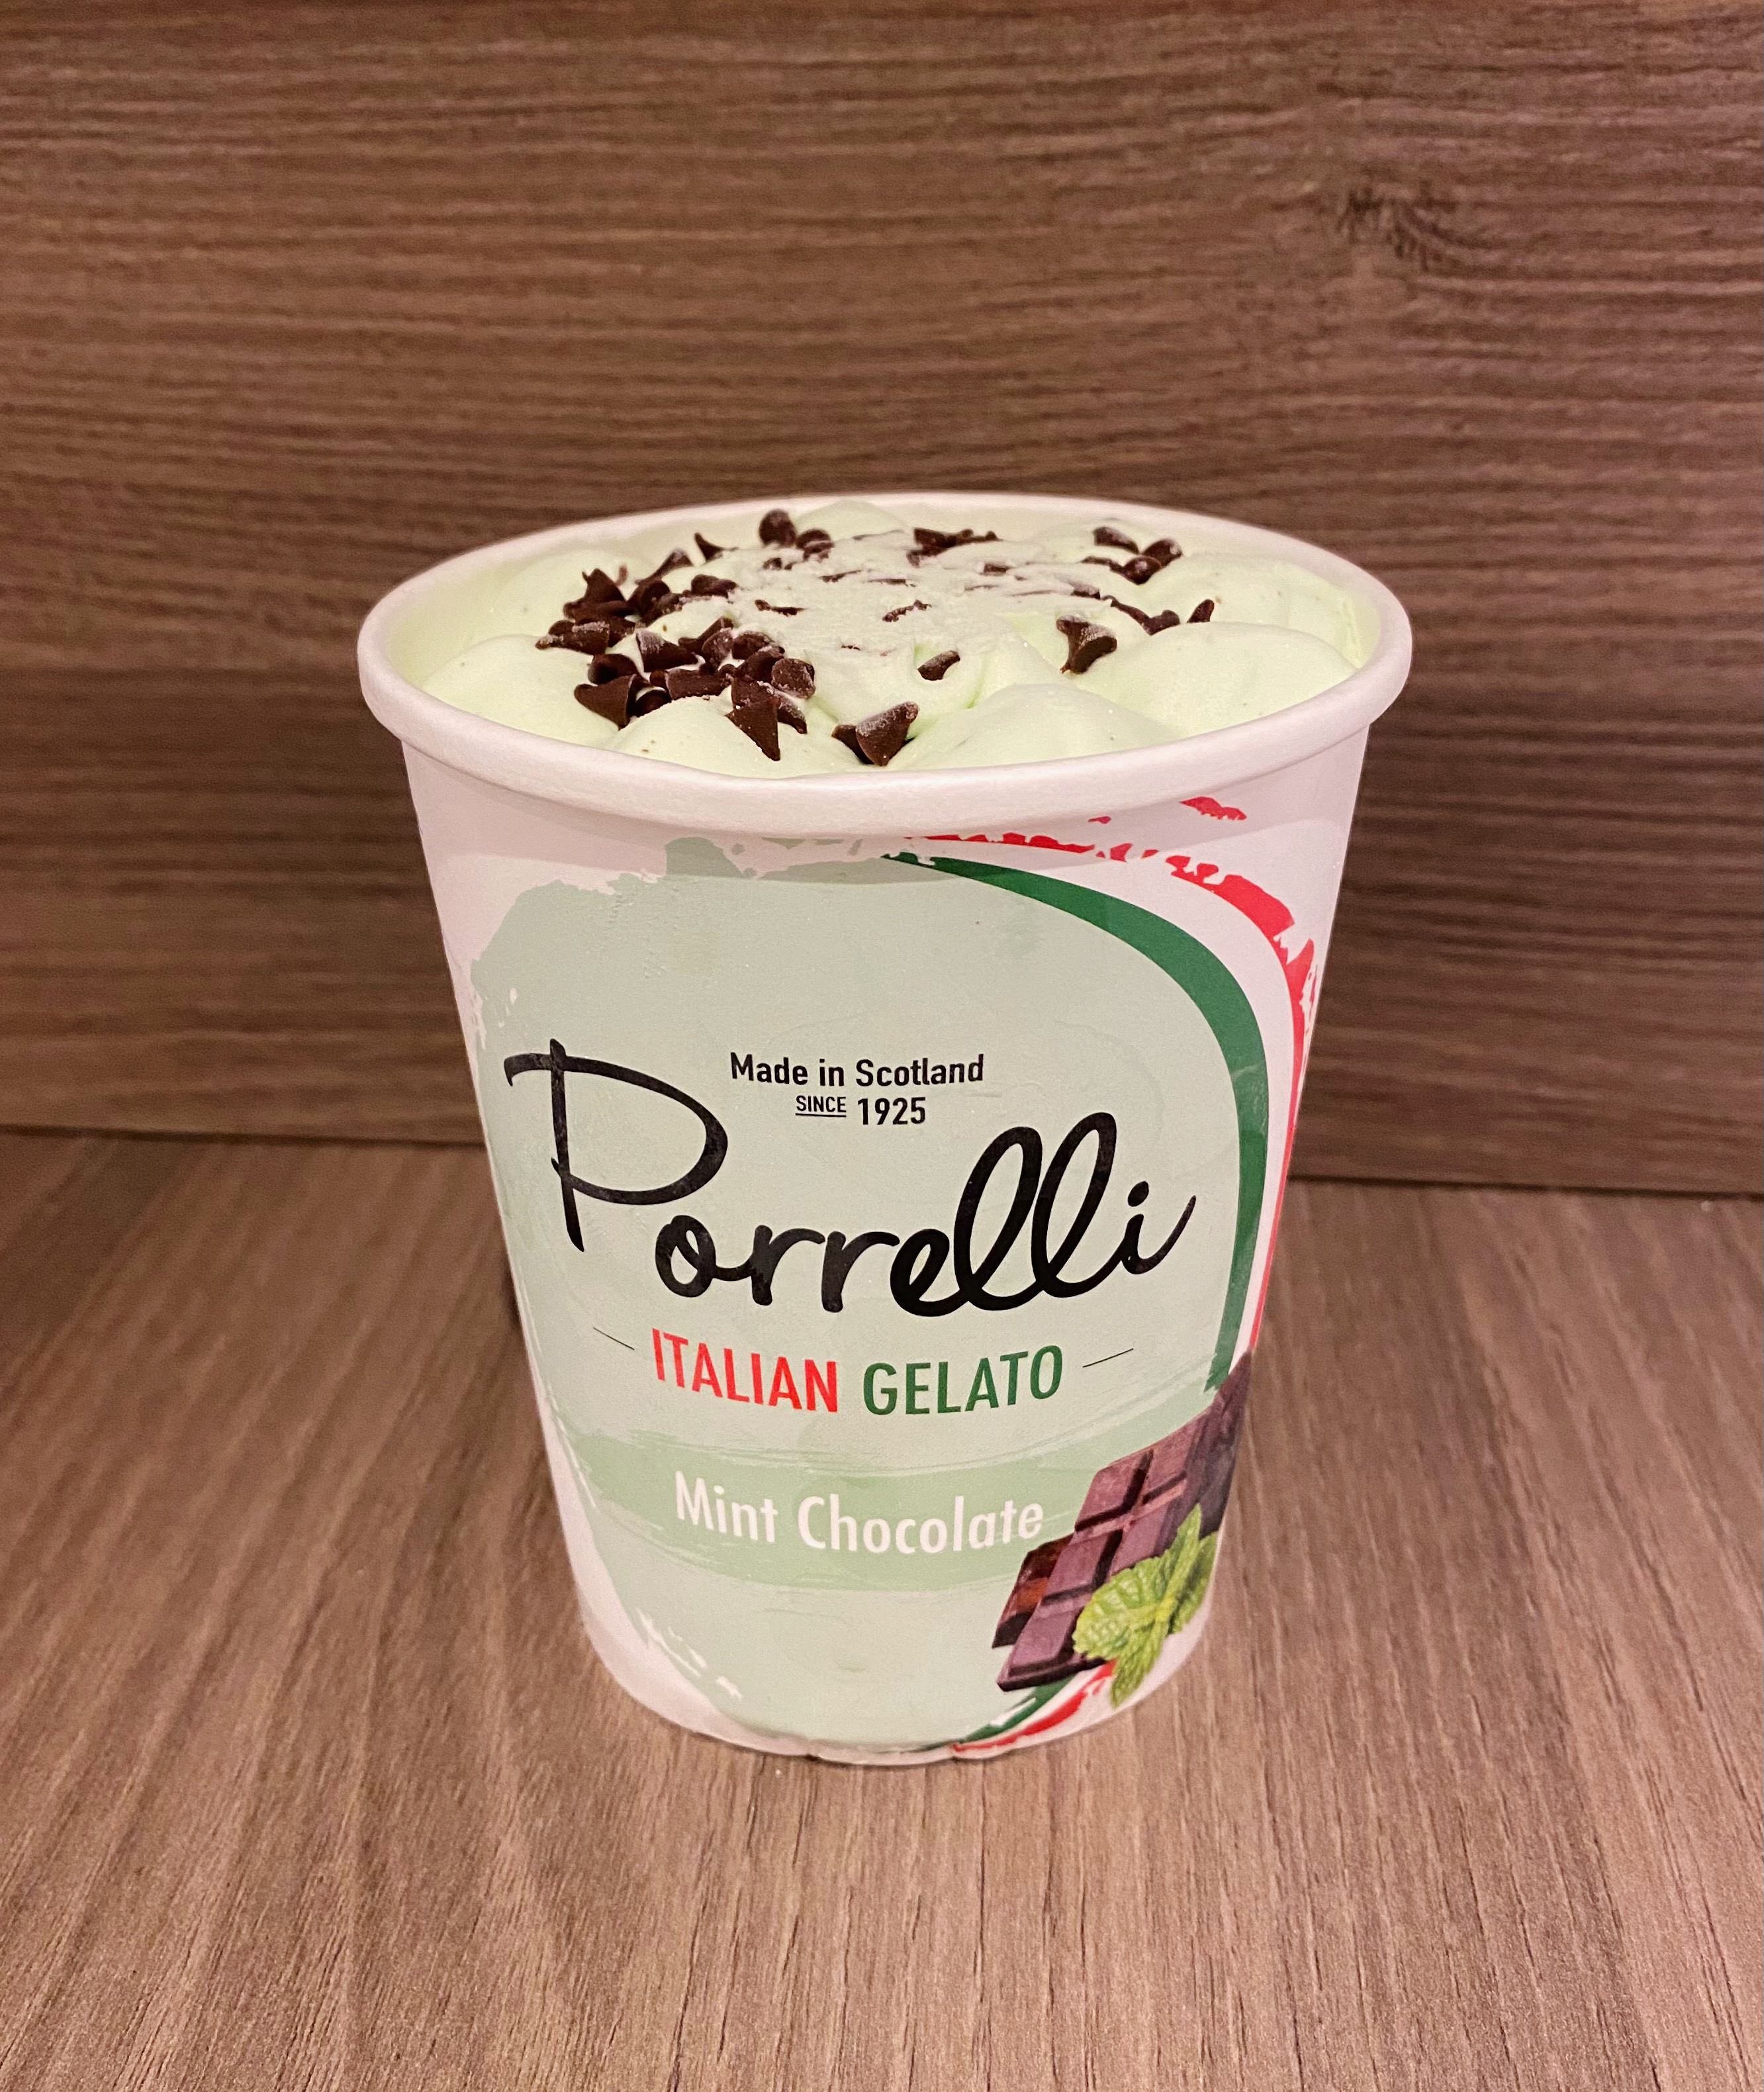 Porrelli's top tips for storing & handling your ice cream - Porrelli